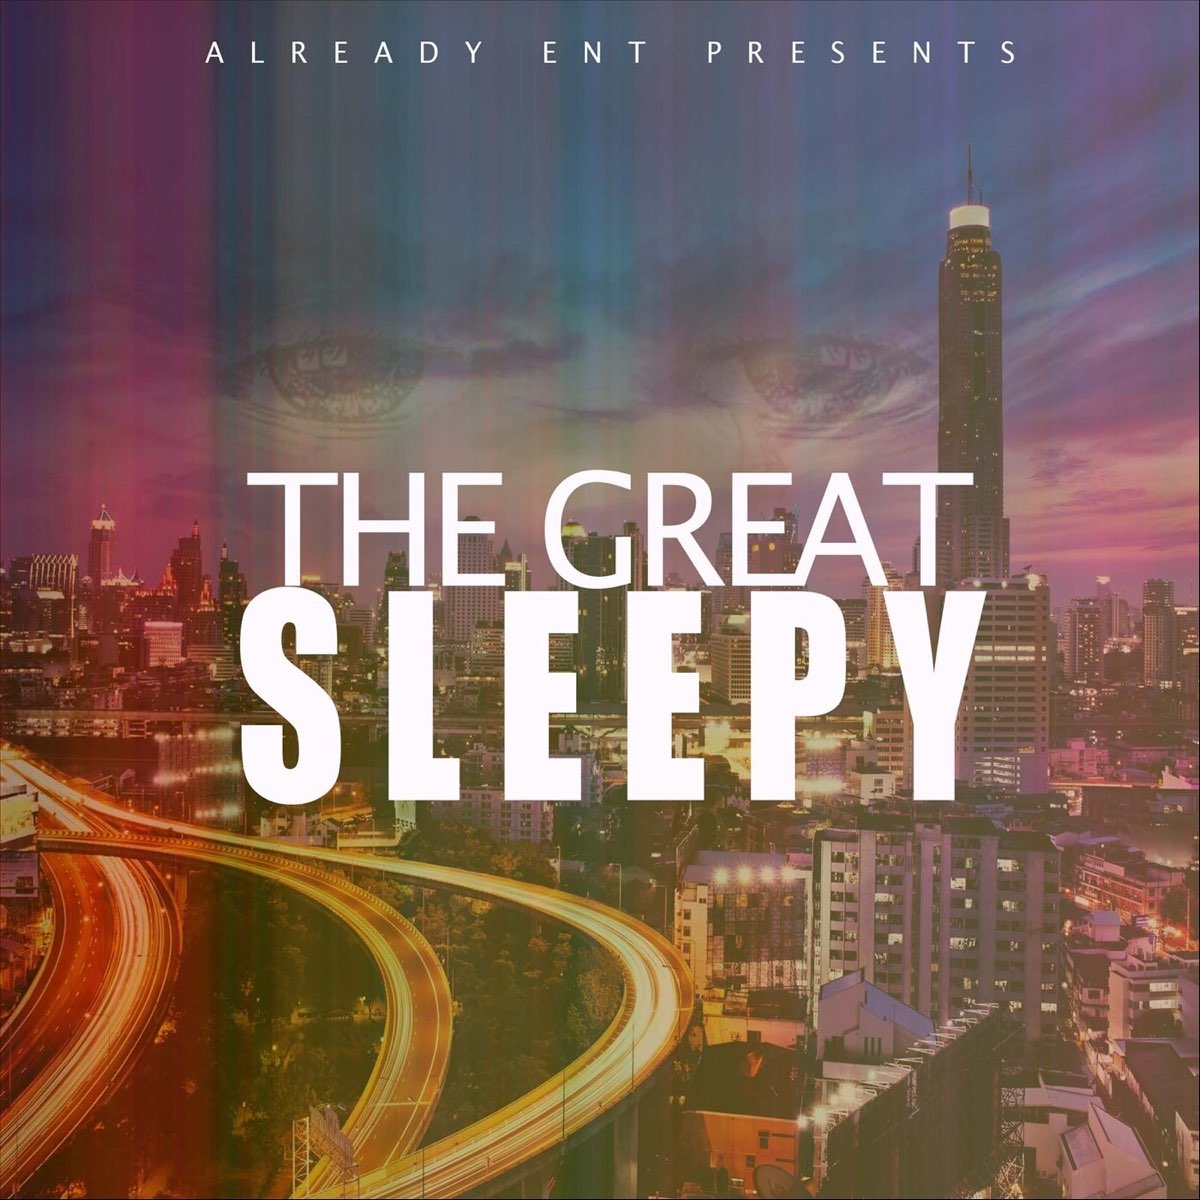 The great sleep